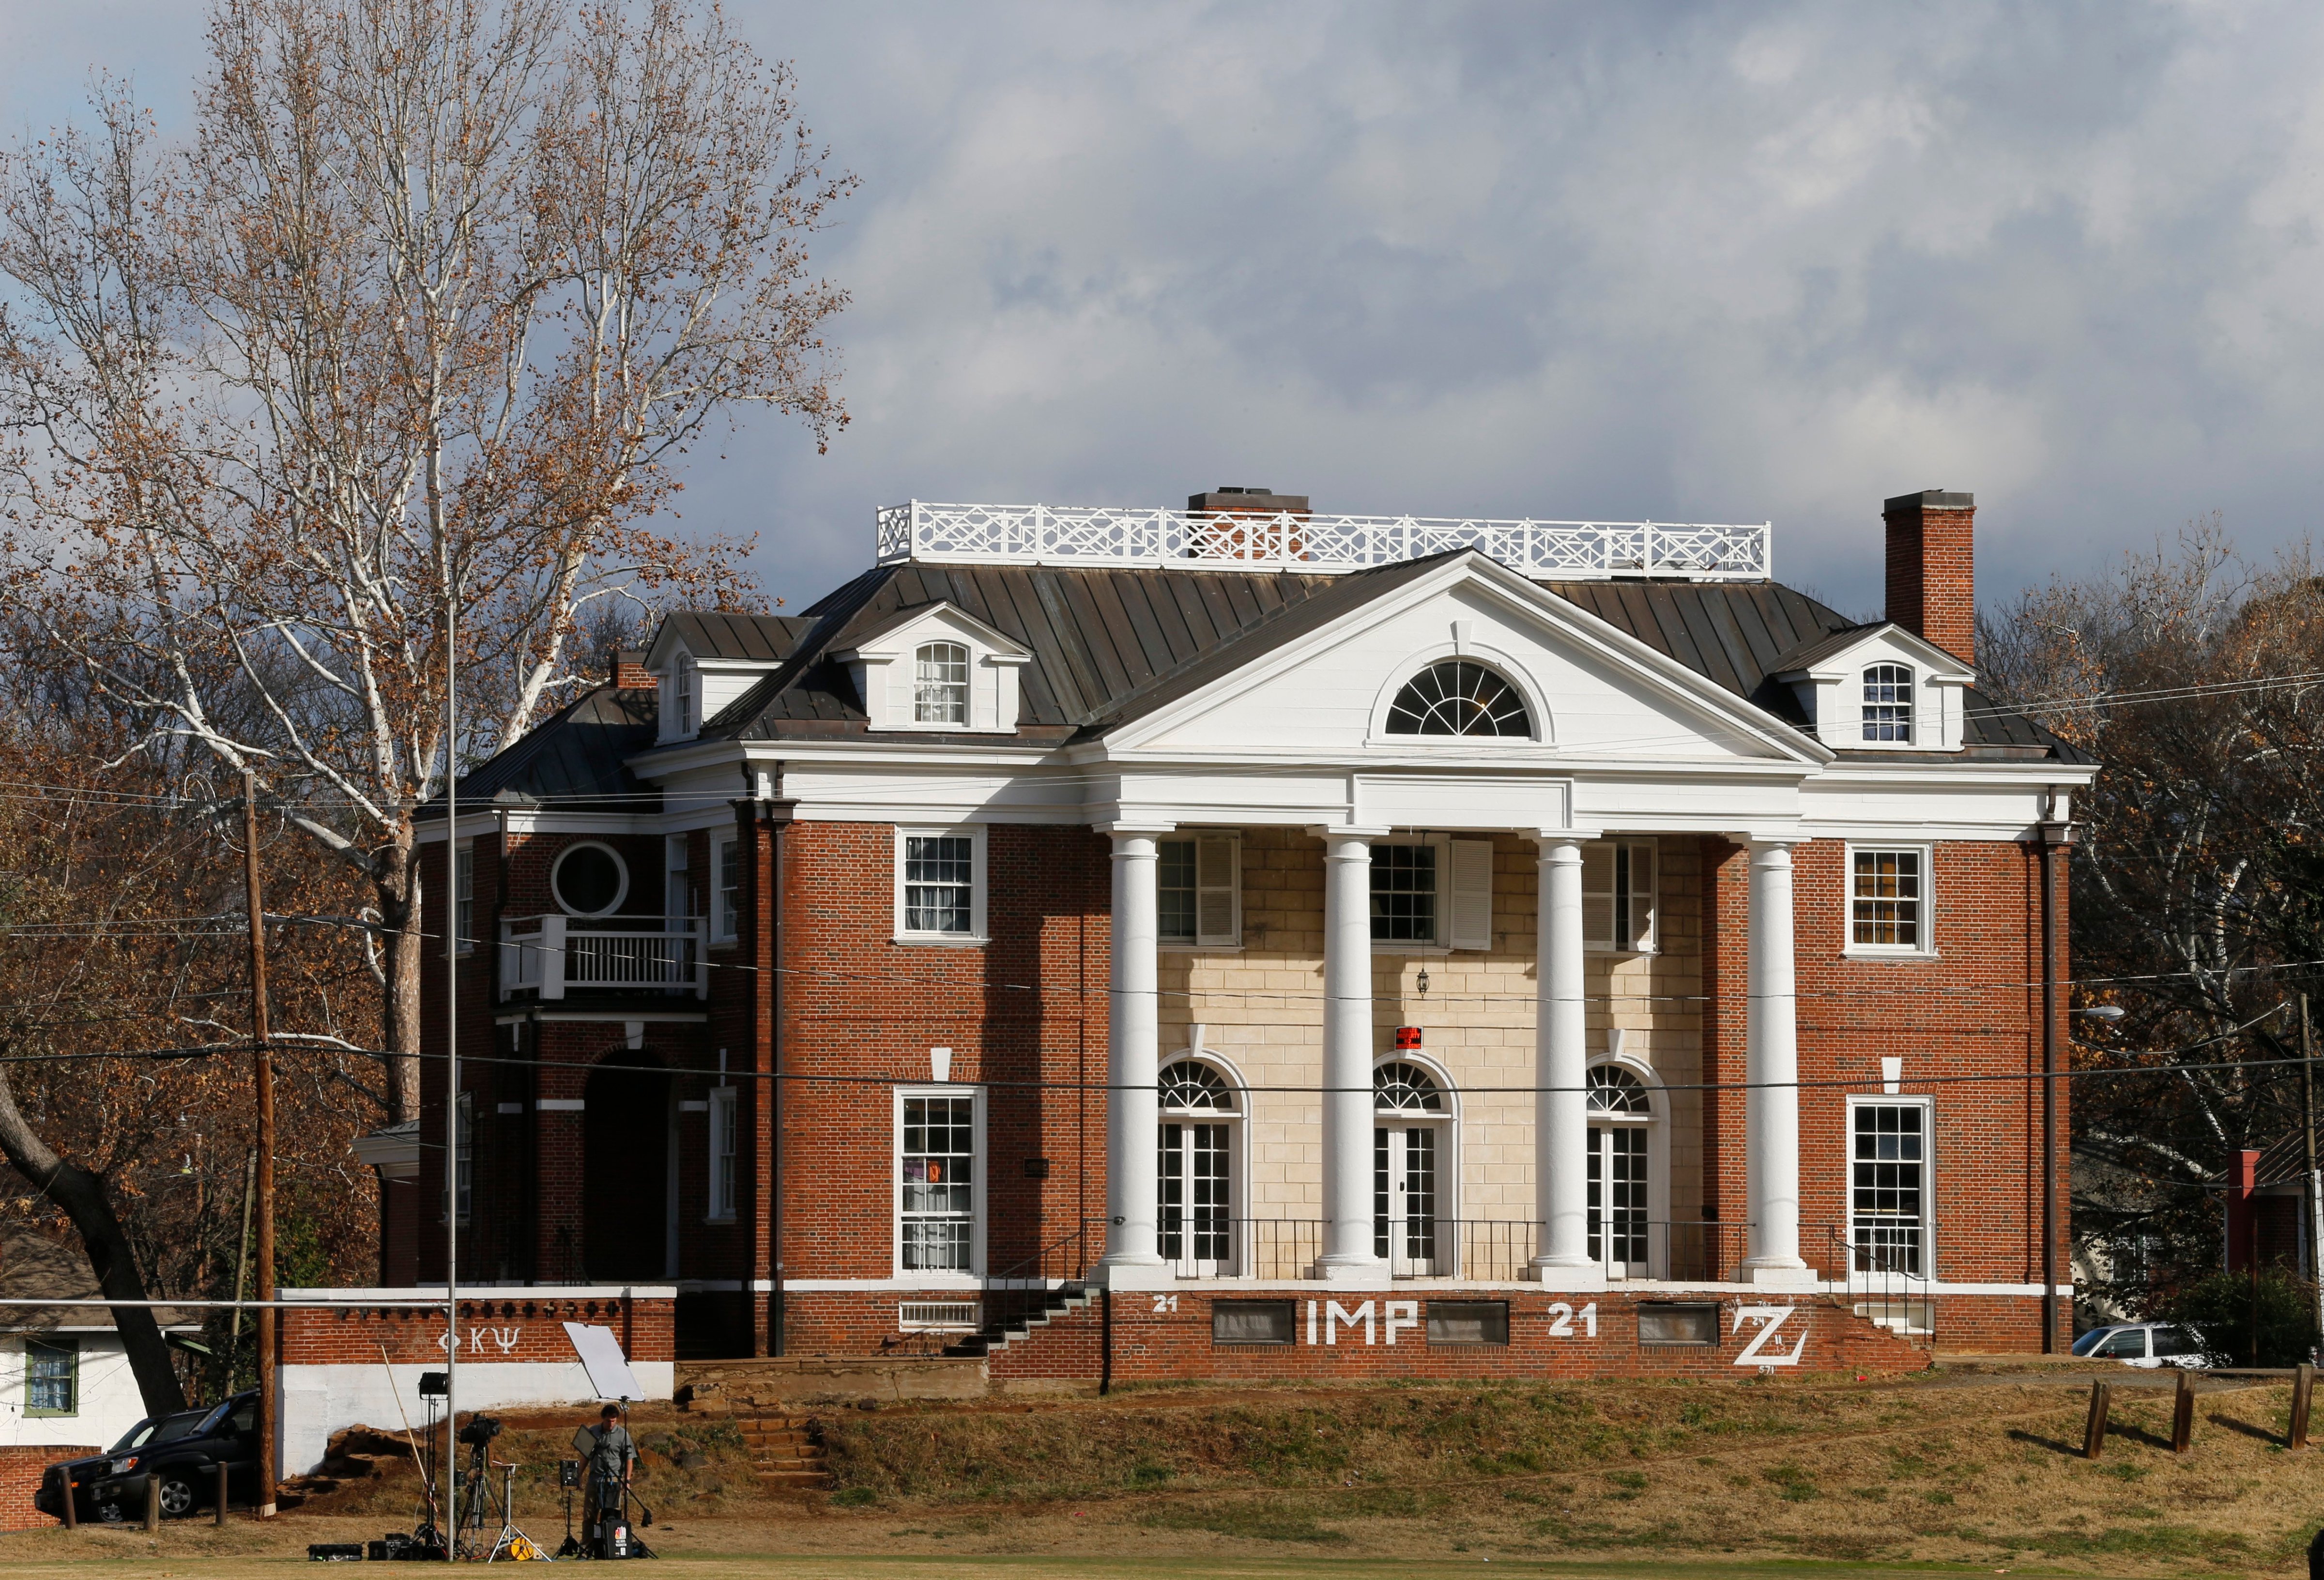 The Phi Kappa Psi fraternity house  at the University of Virginia in Charlottesville, Va. on Nov. 24, 2014.